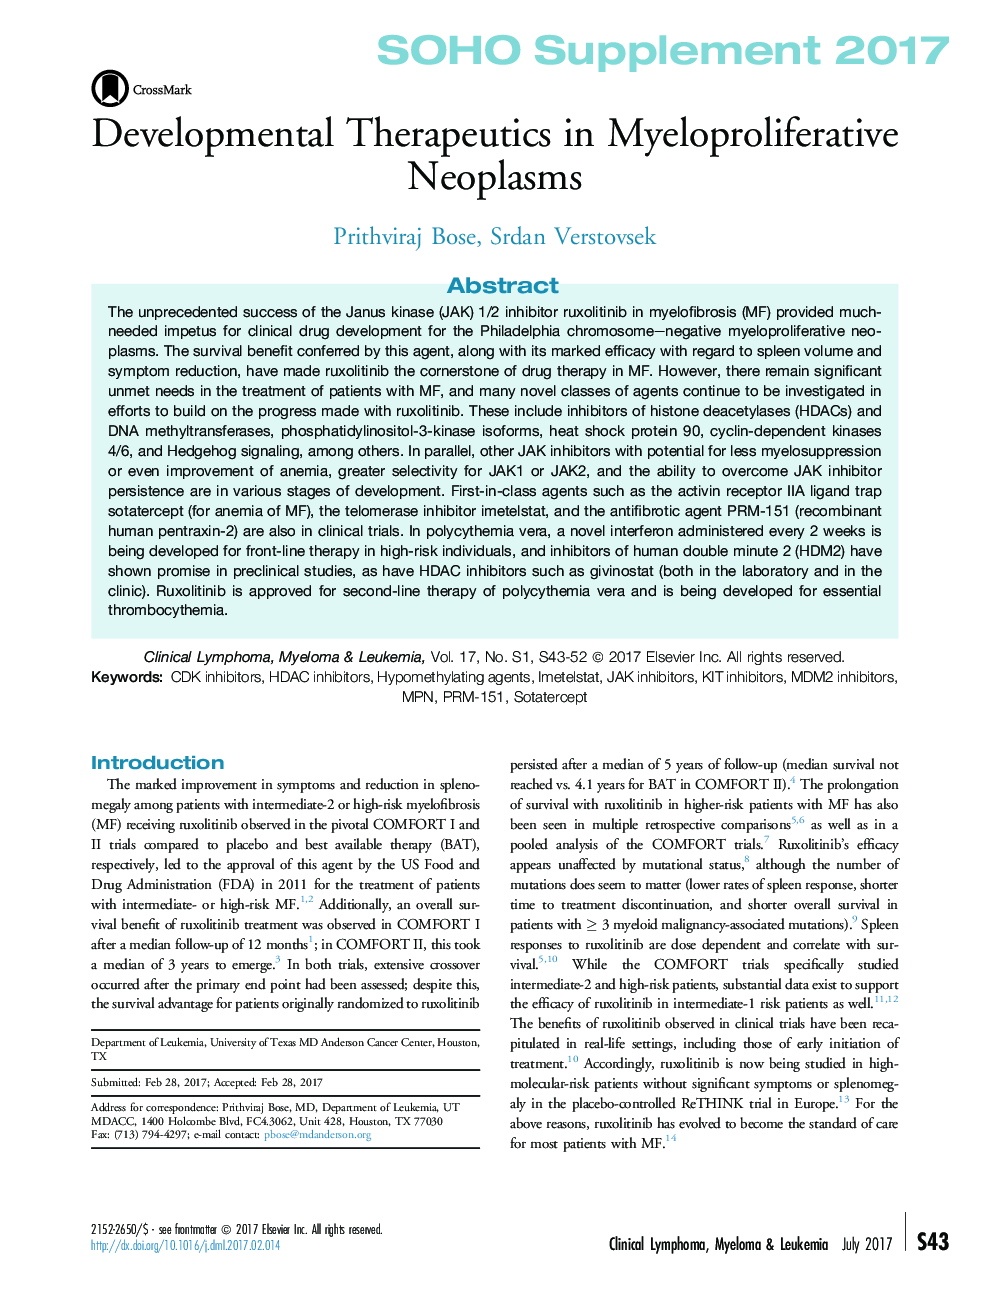 Developmental Therapeutics in Myeloproliferative Neoplasms